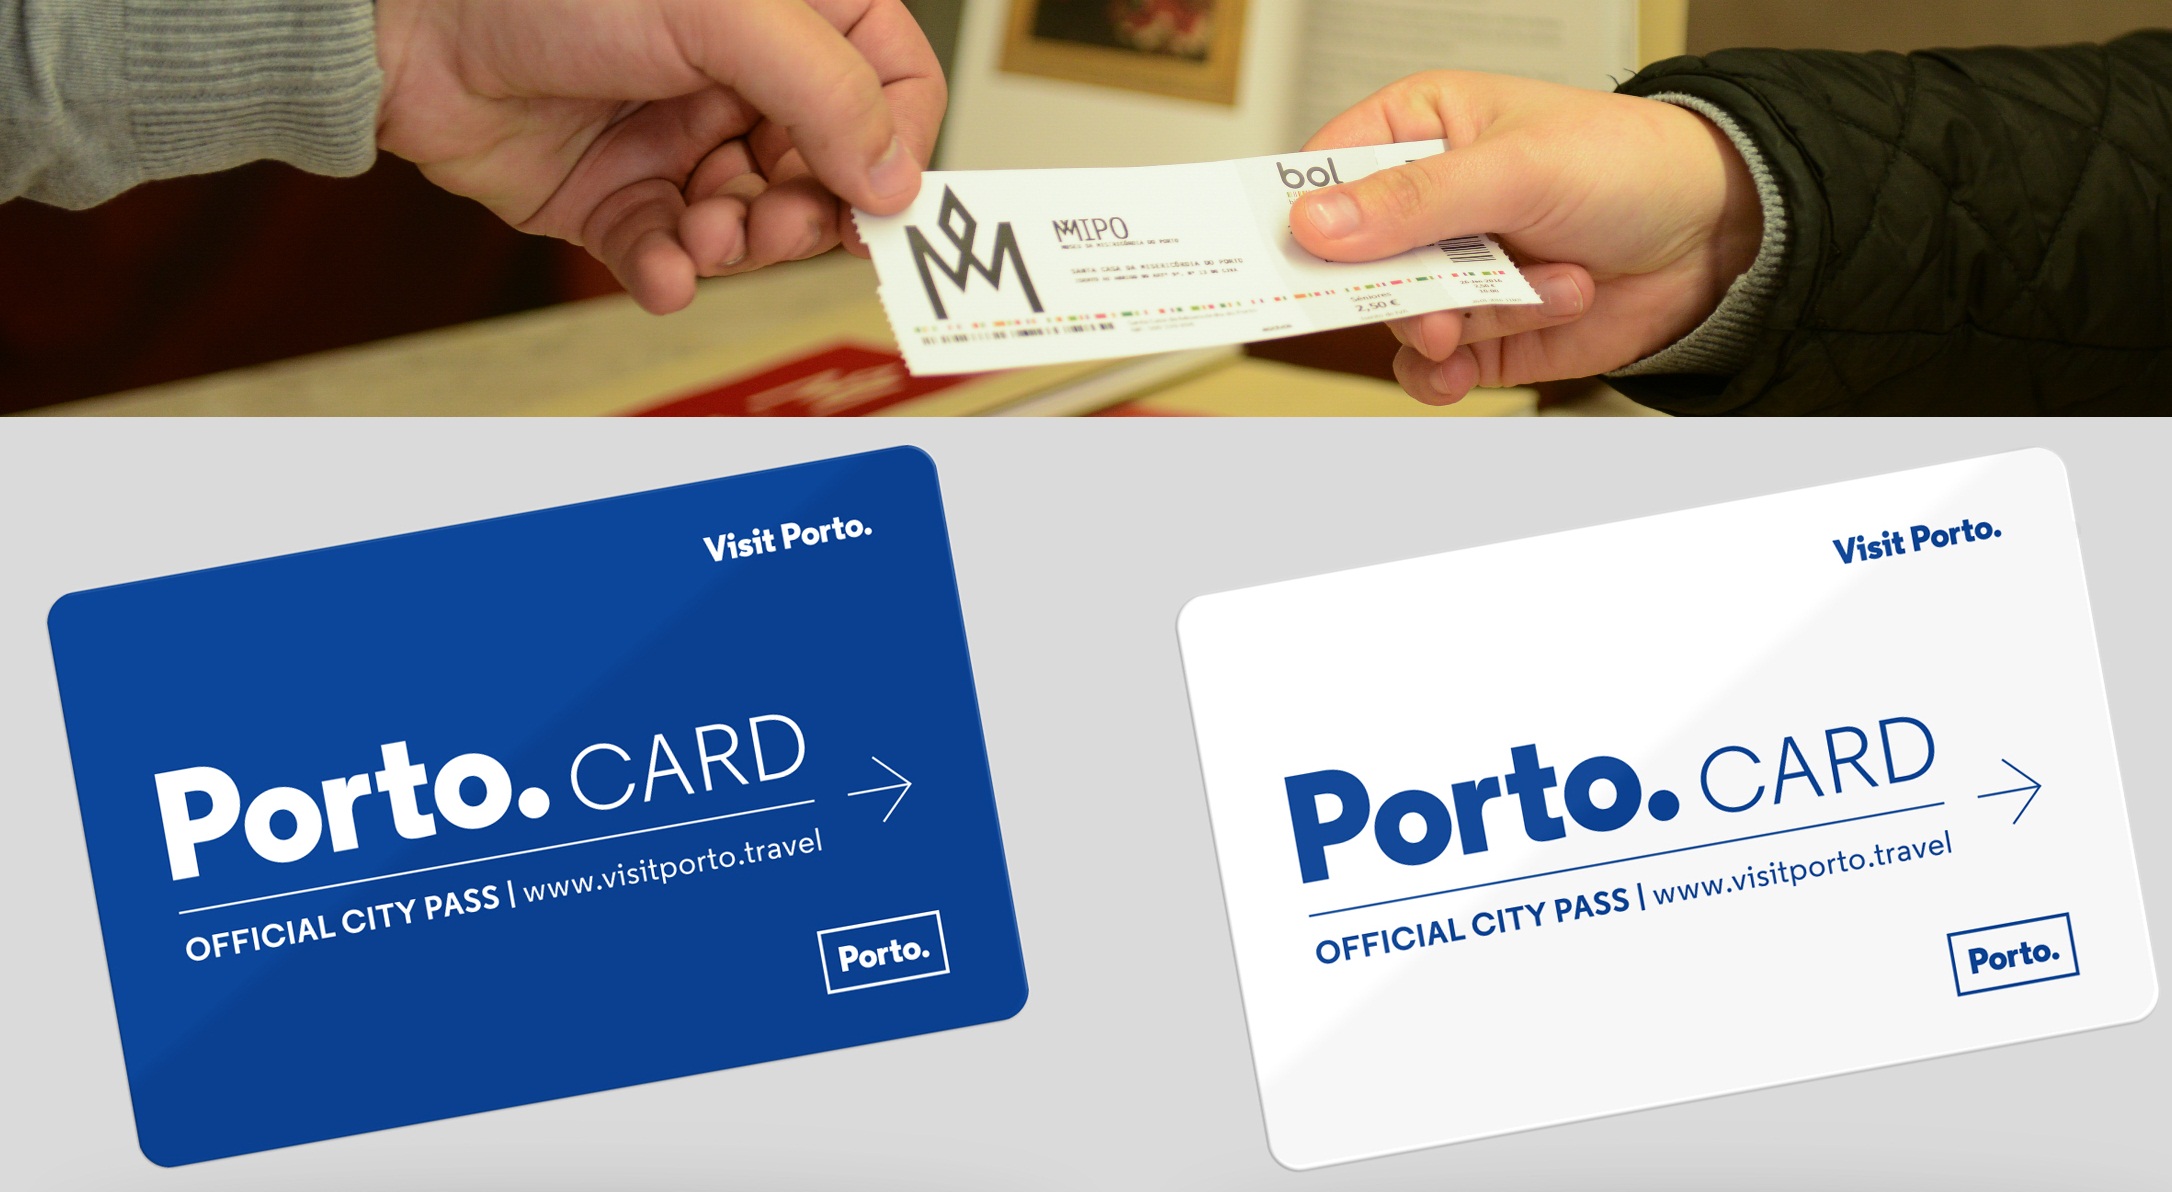 https://www.scmp.pt/assets/misc/2017/Porto%20card/portocard-capa.jpg